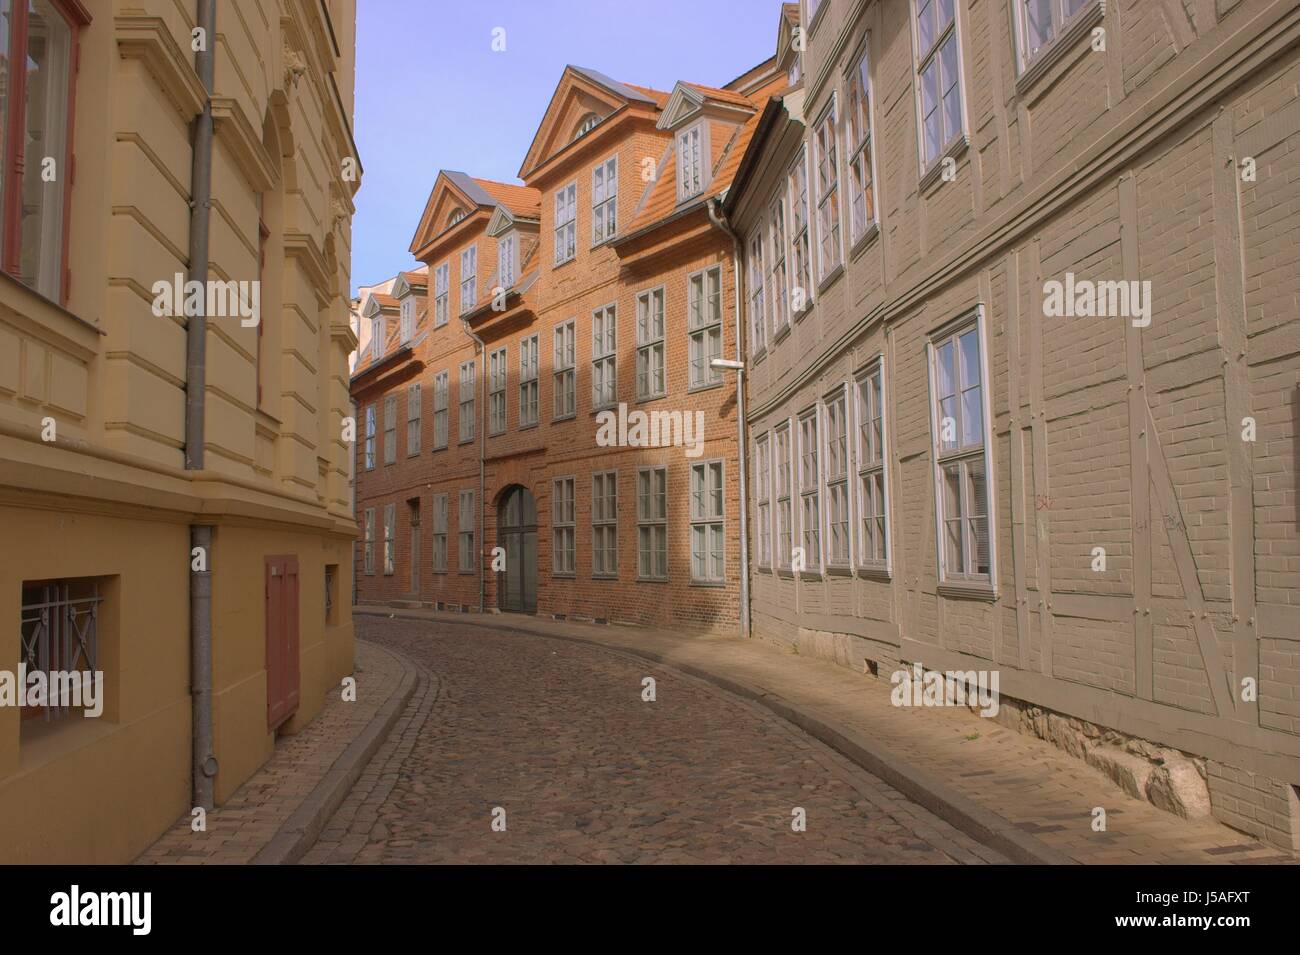 Häuser alte Stadt Mecklenburg Linkskurve Pfad Weg Straße Straße gasse Stockfoto